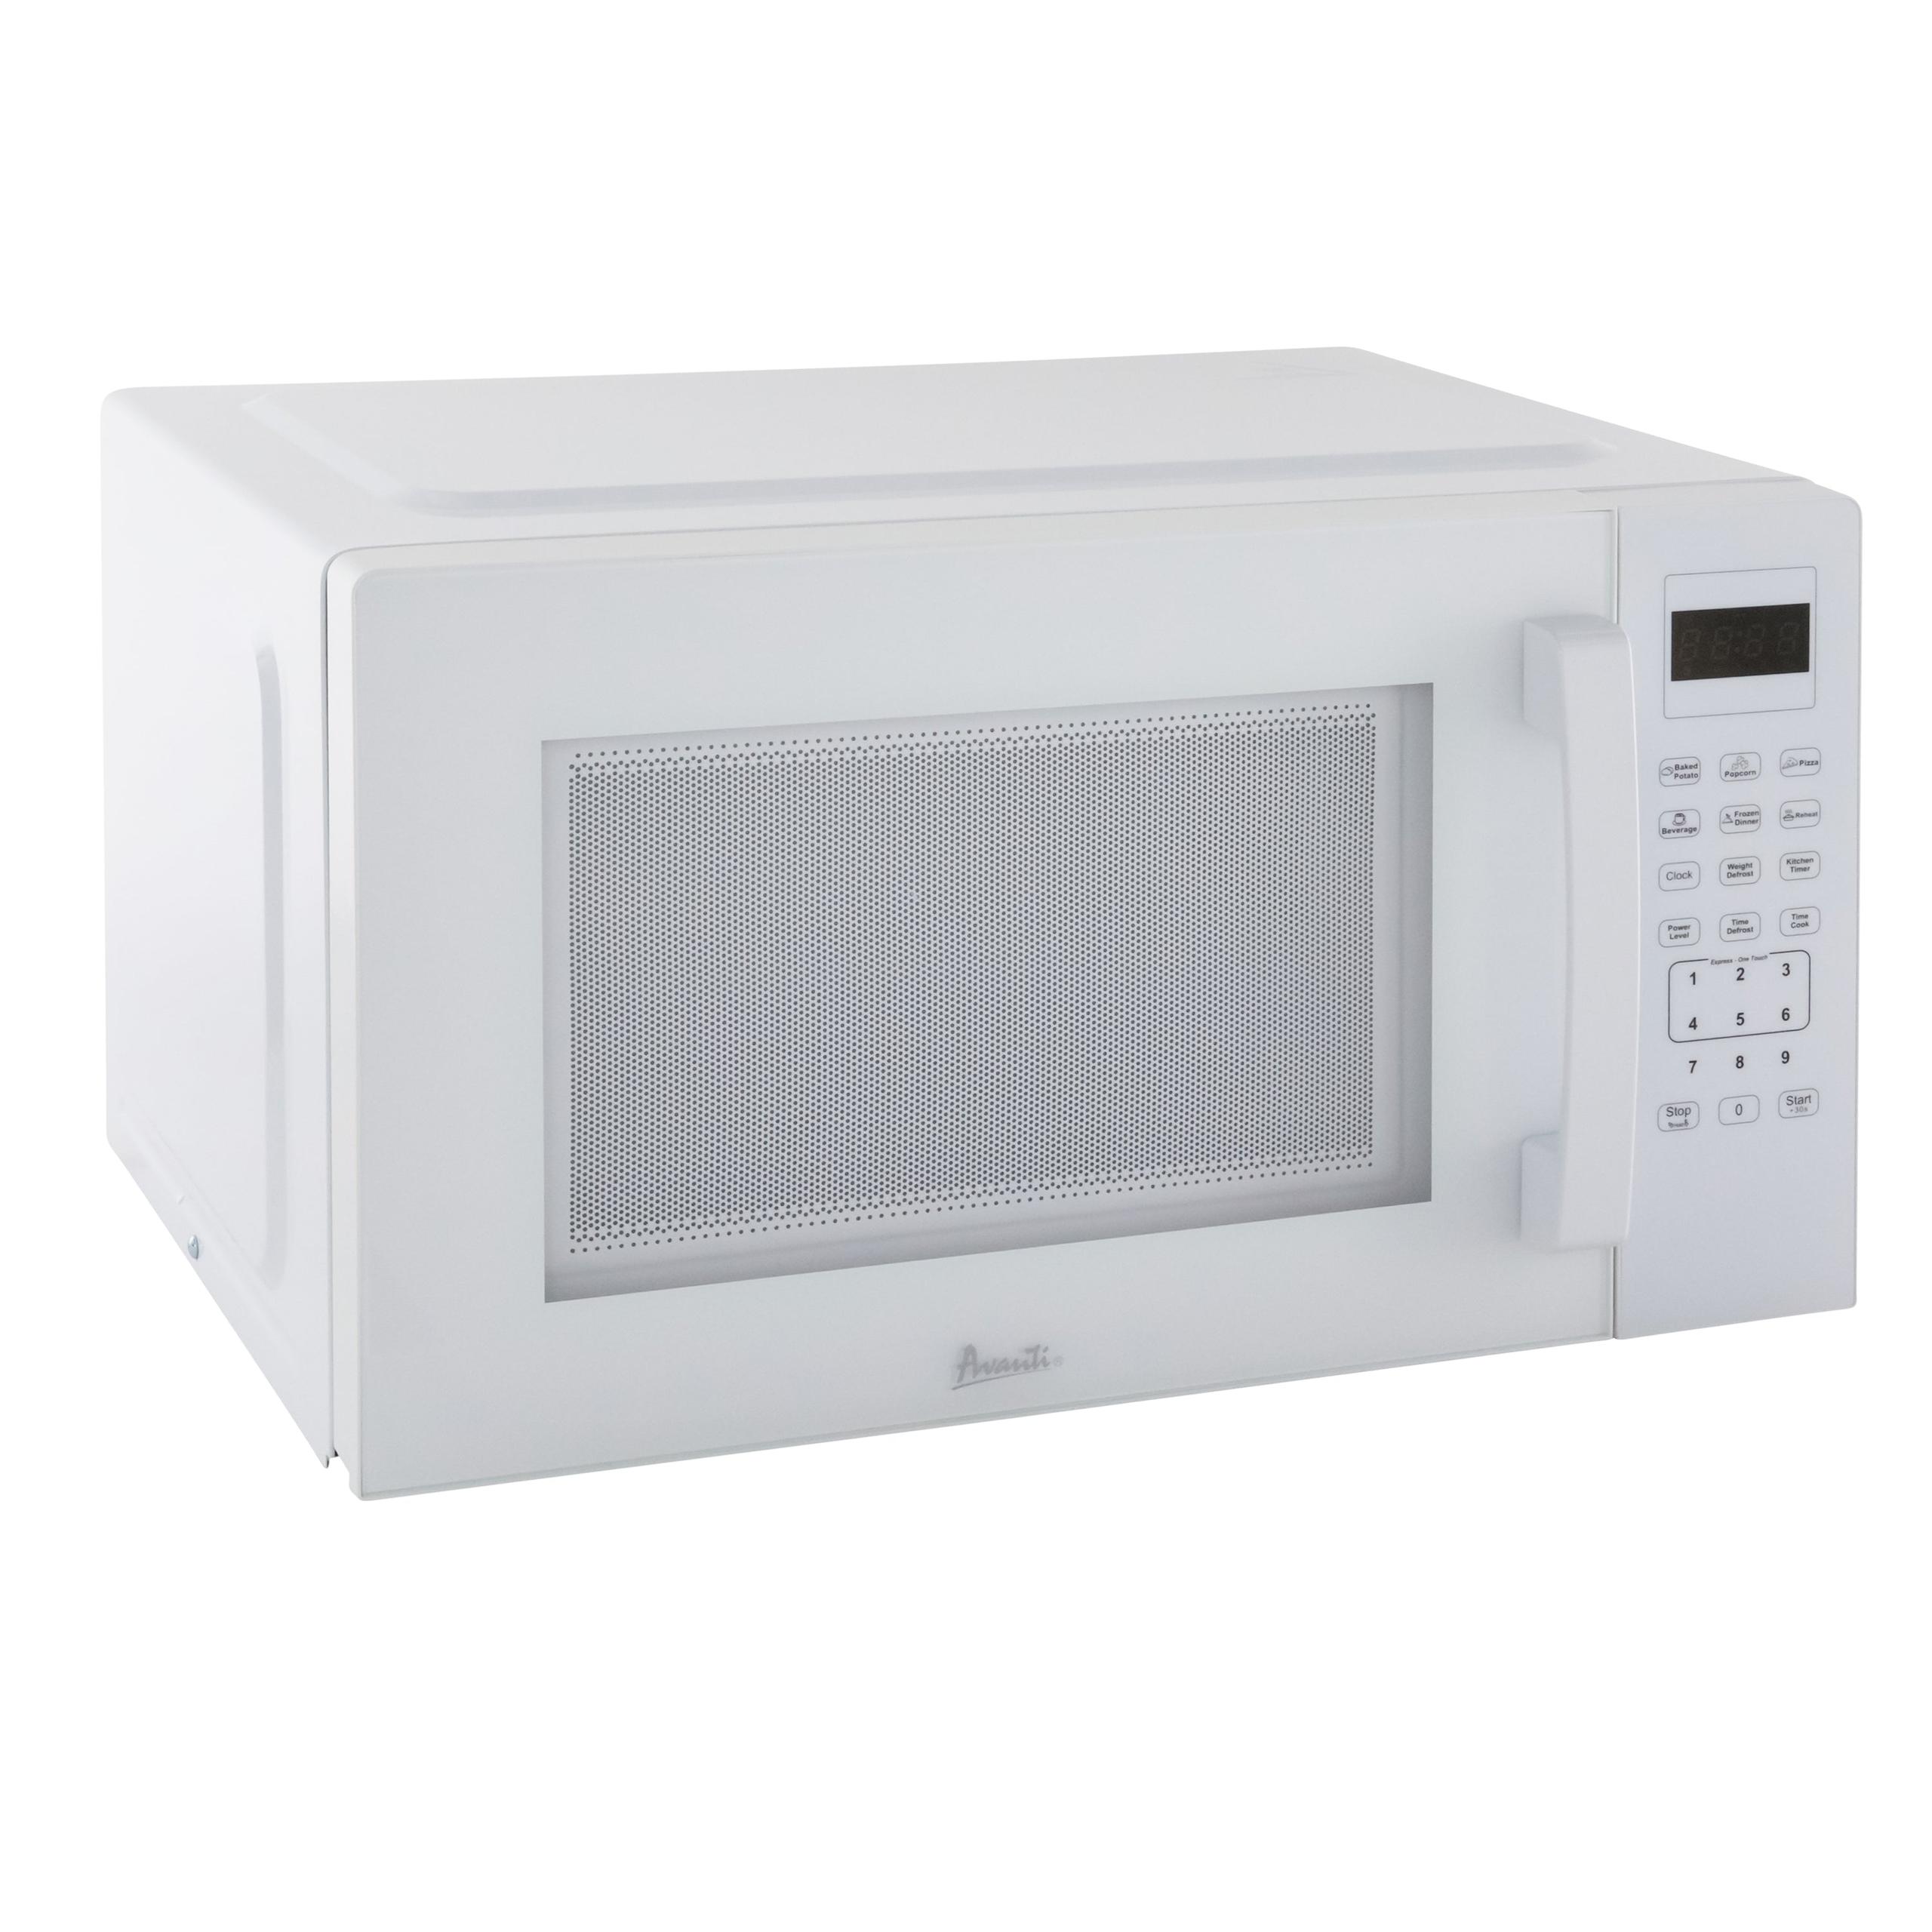 Avanti 1.5 cu. ft. Microwave Oven - White / 1.5 cu. ft.